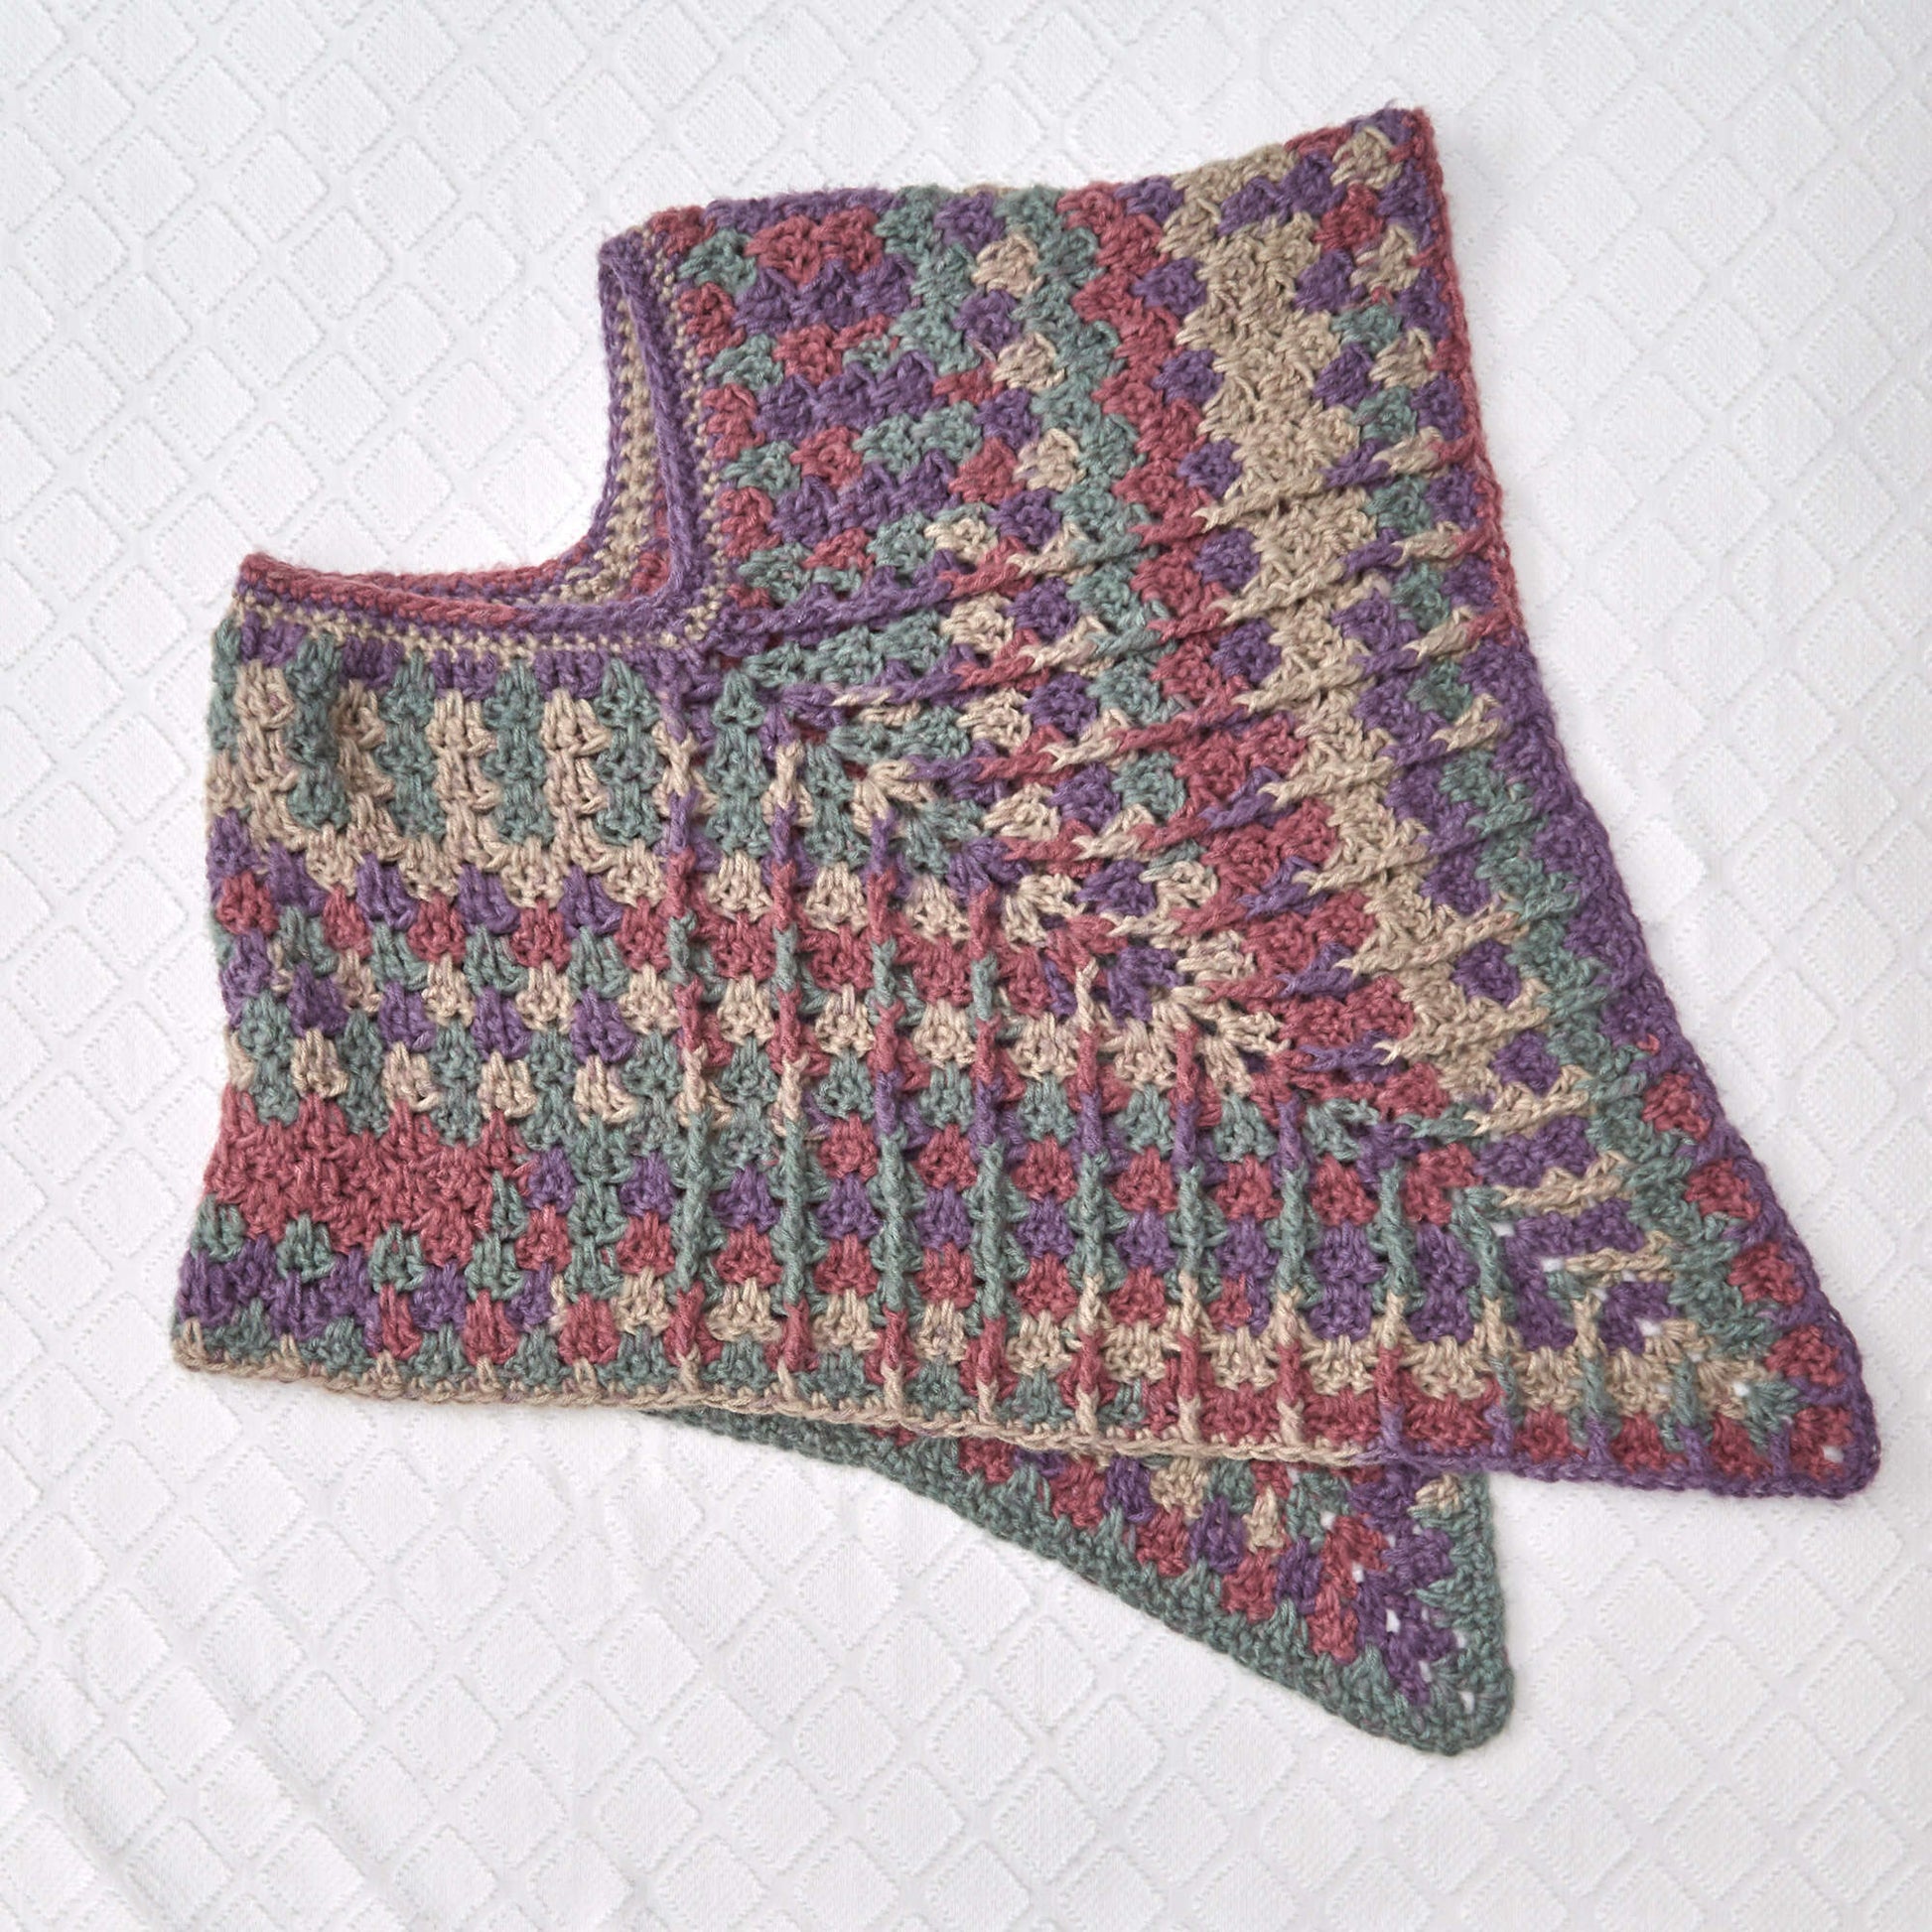 Free Red Heart Mountain Breeze Poncho Crochet Pattern